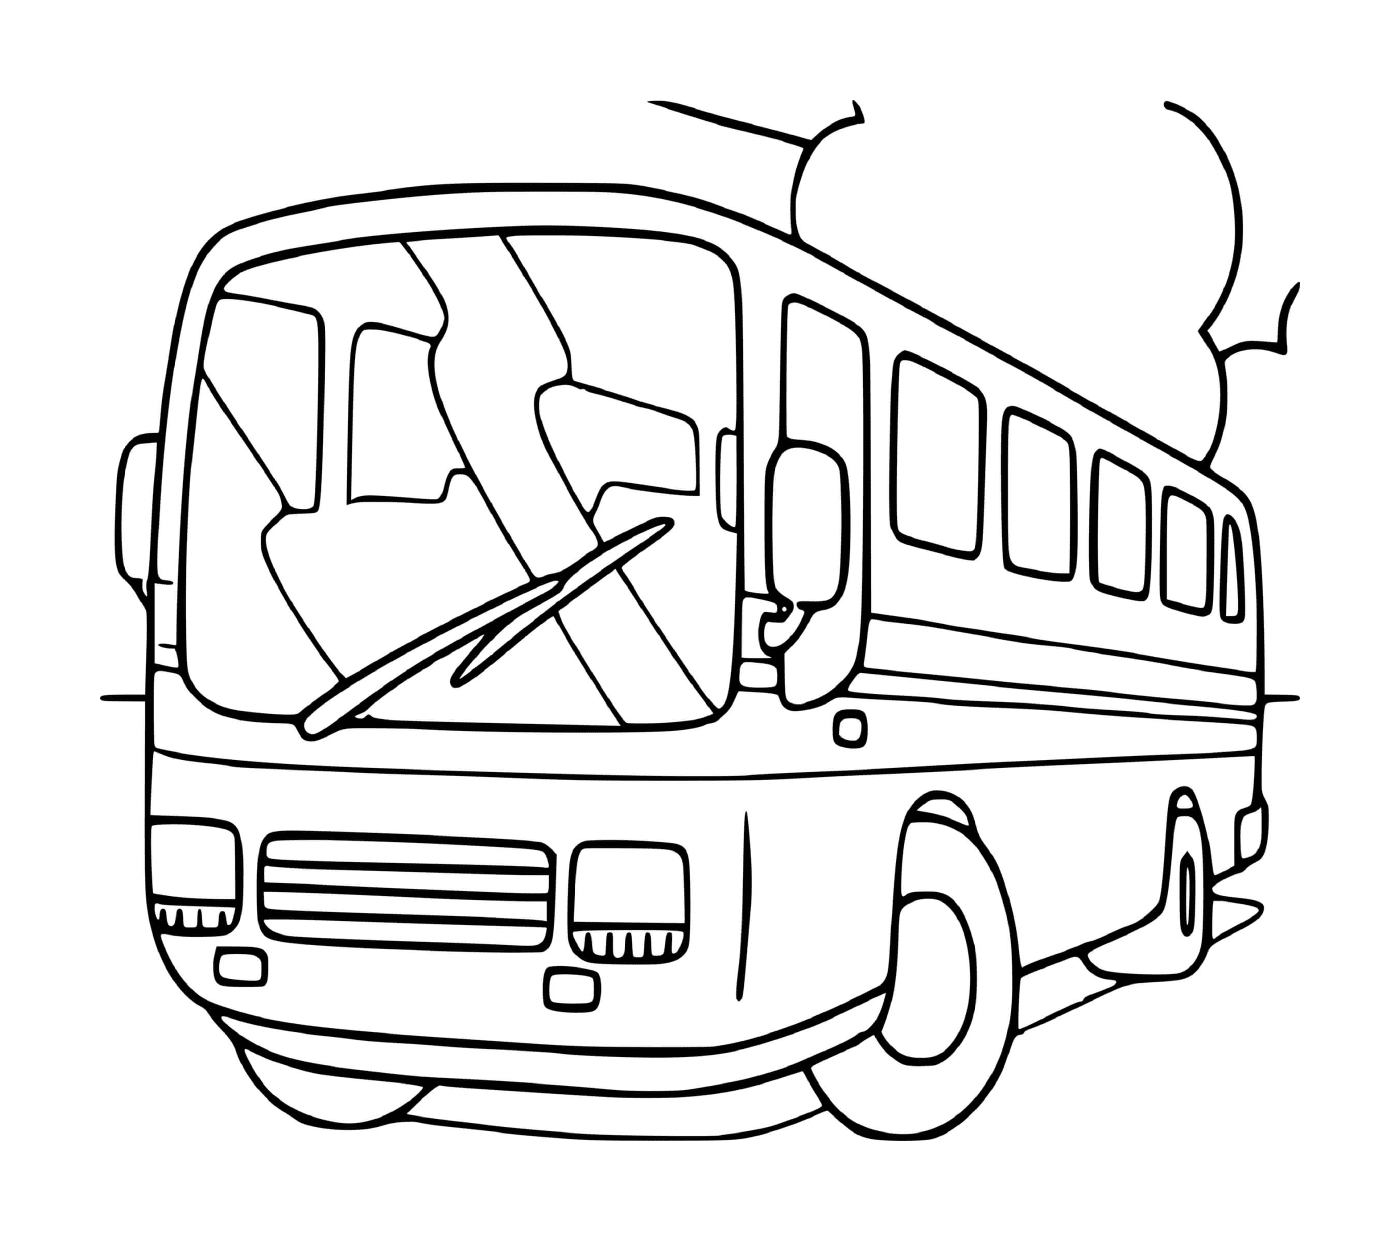   Un autobus 